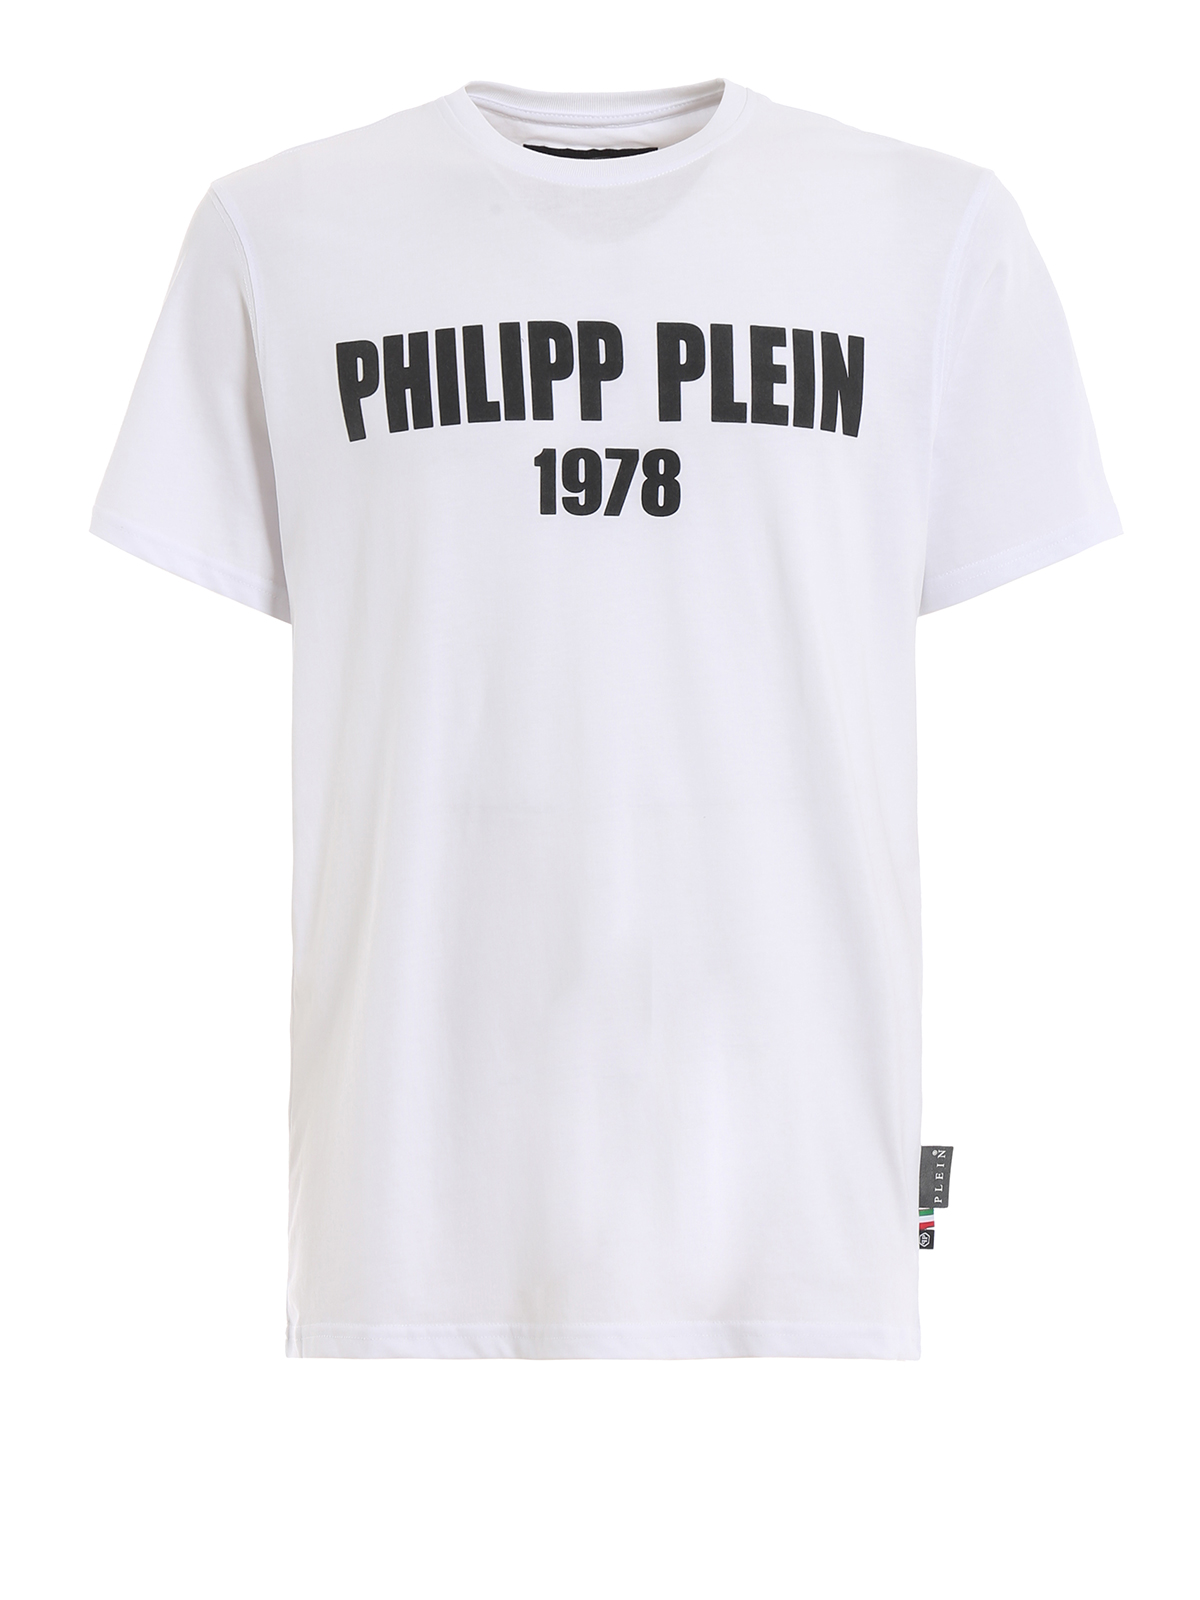 philipp plein 78 t shirt